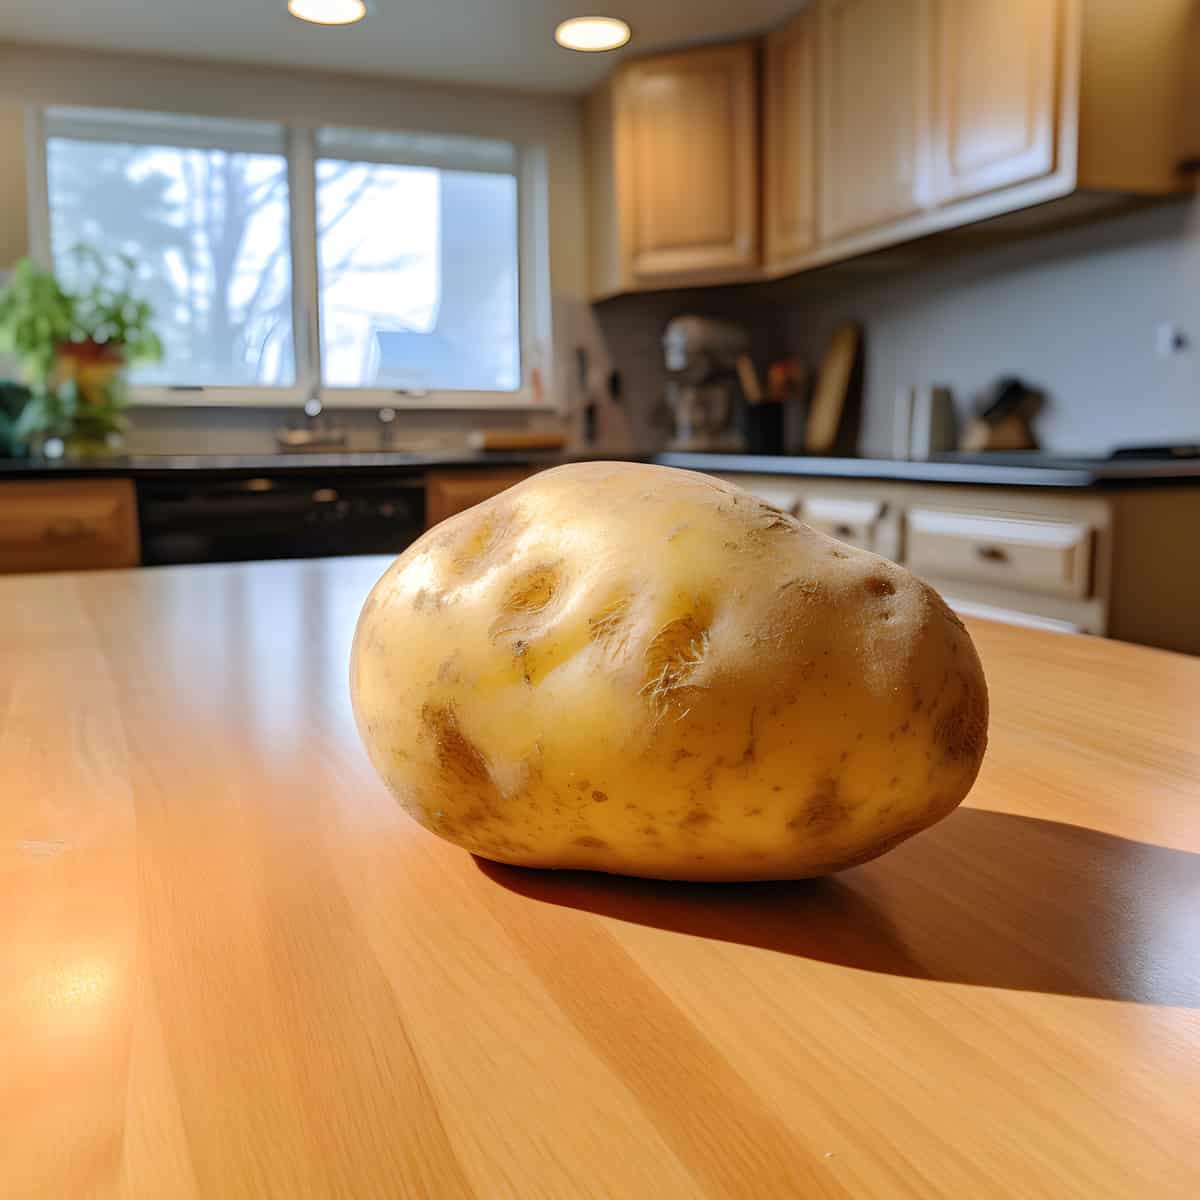 Bildtstar Potatoes on a kitchen counter